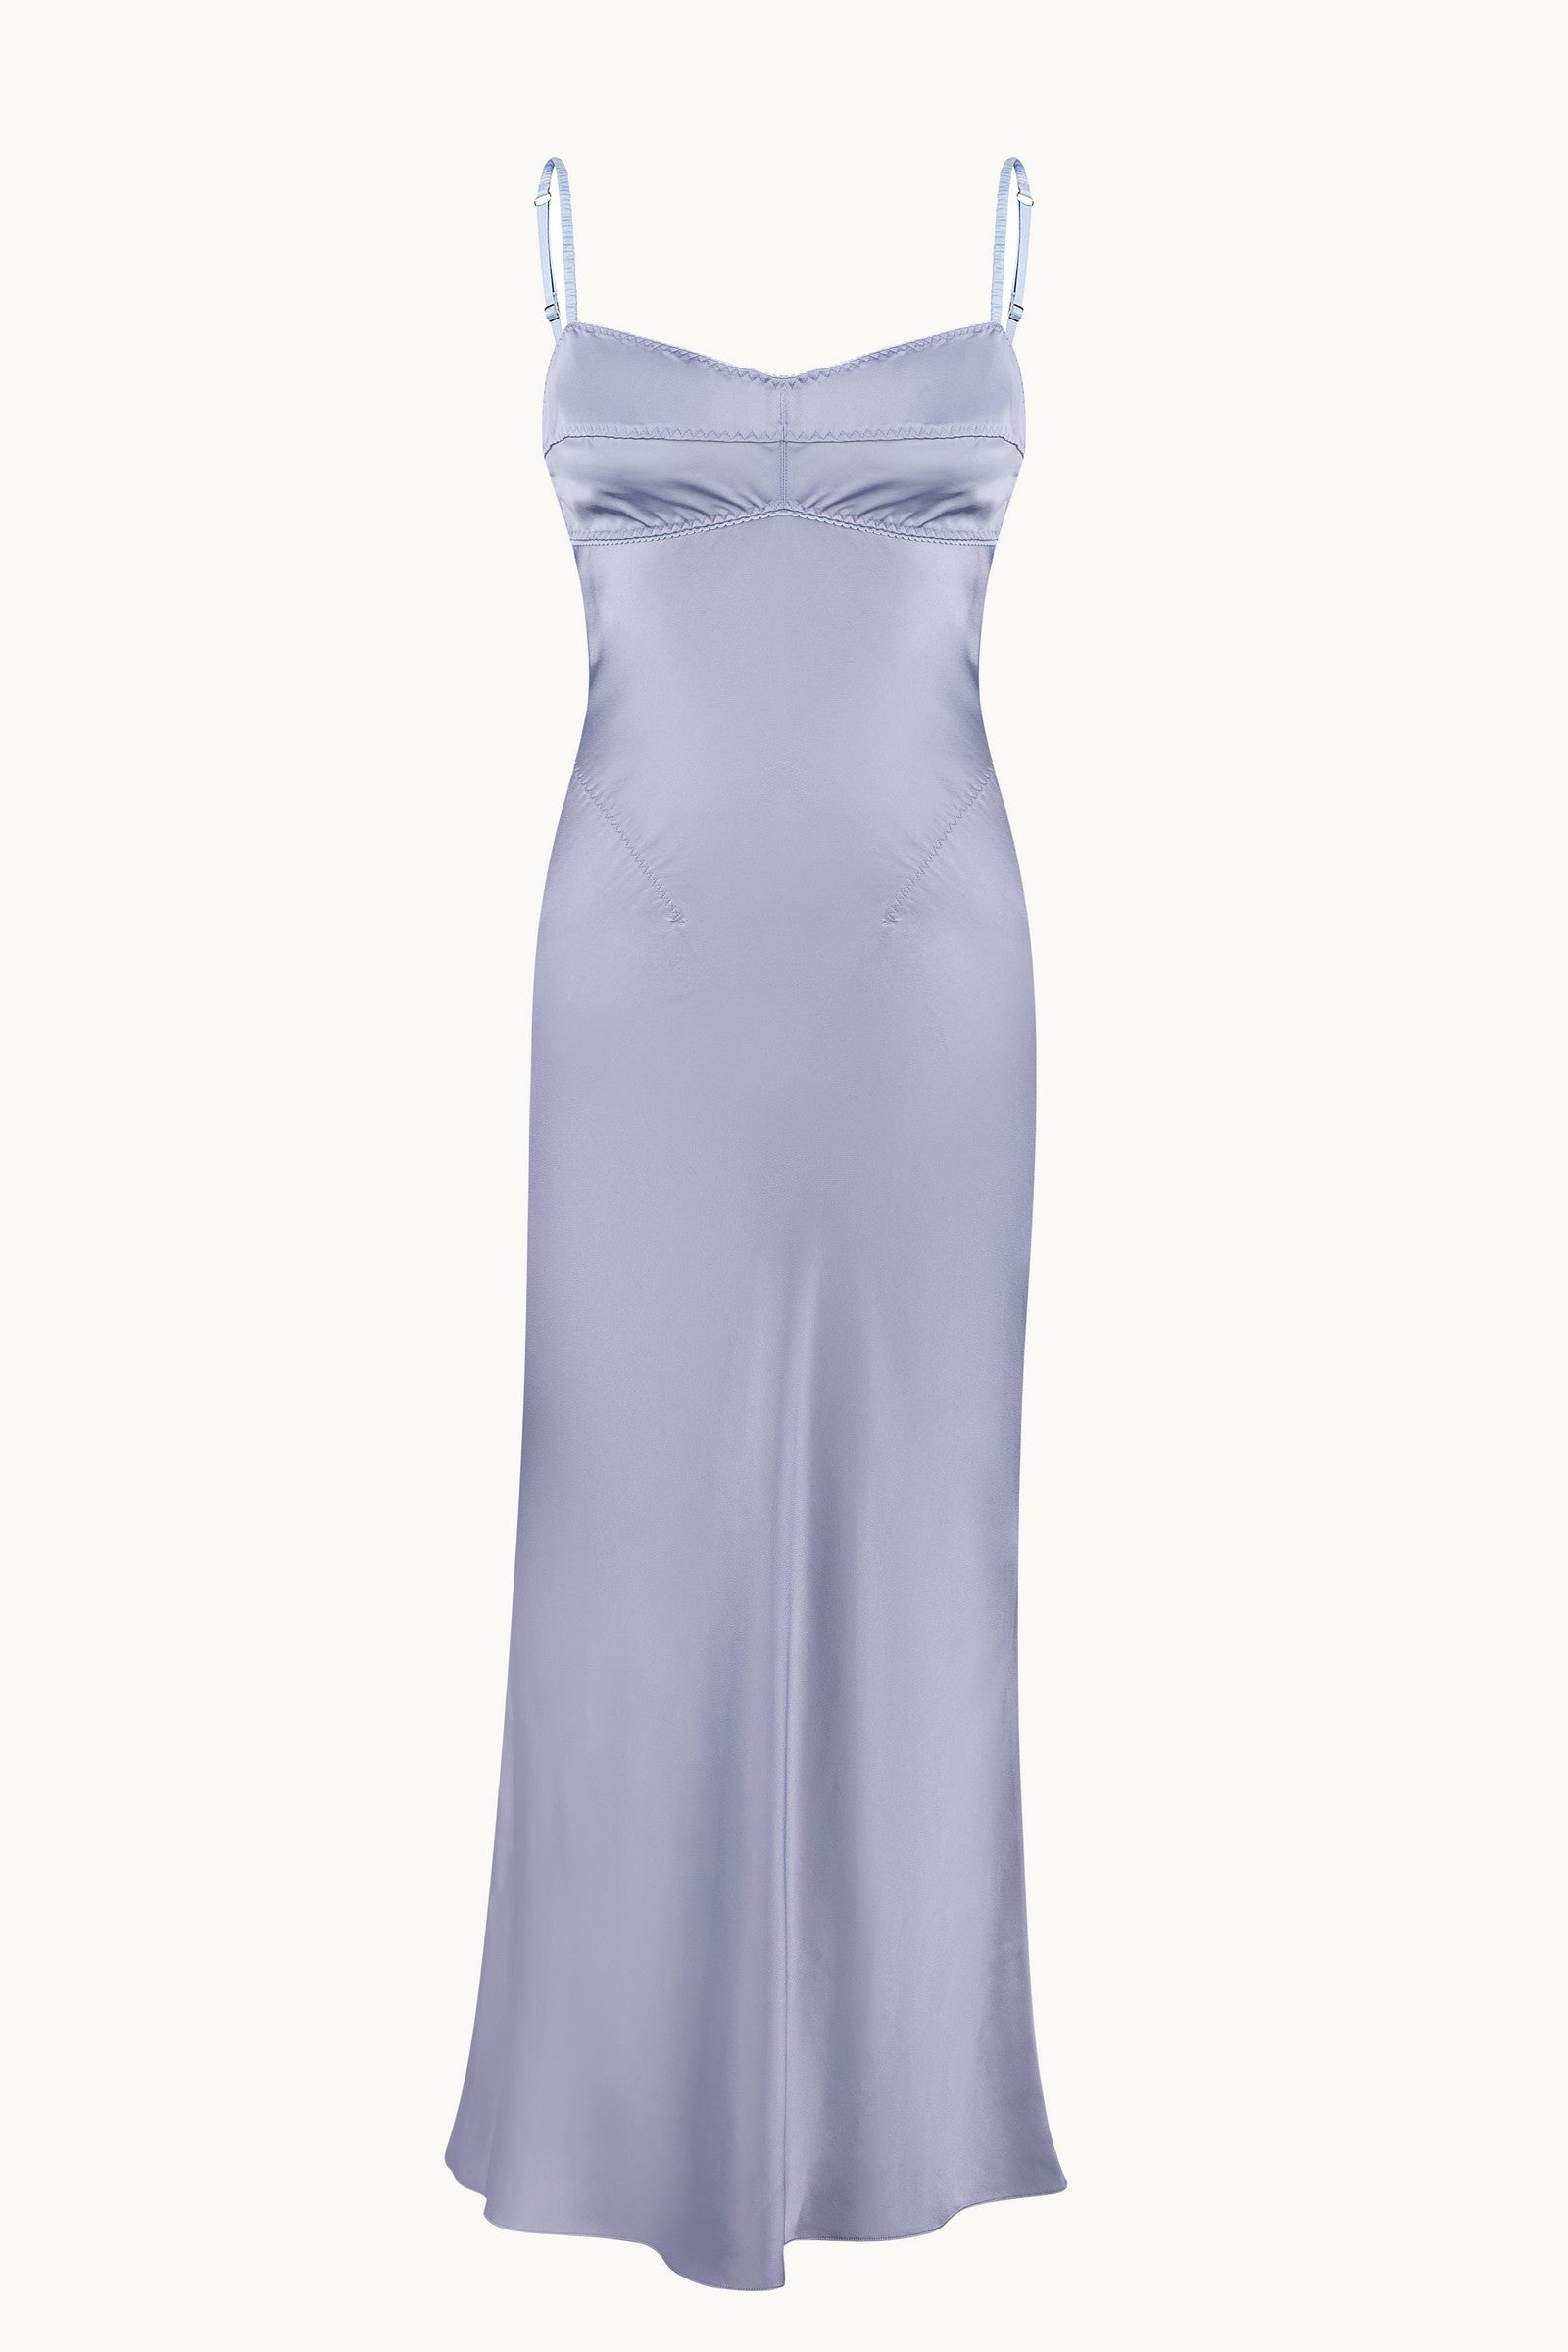 Waterlily dress